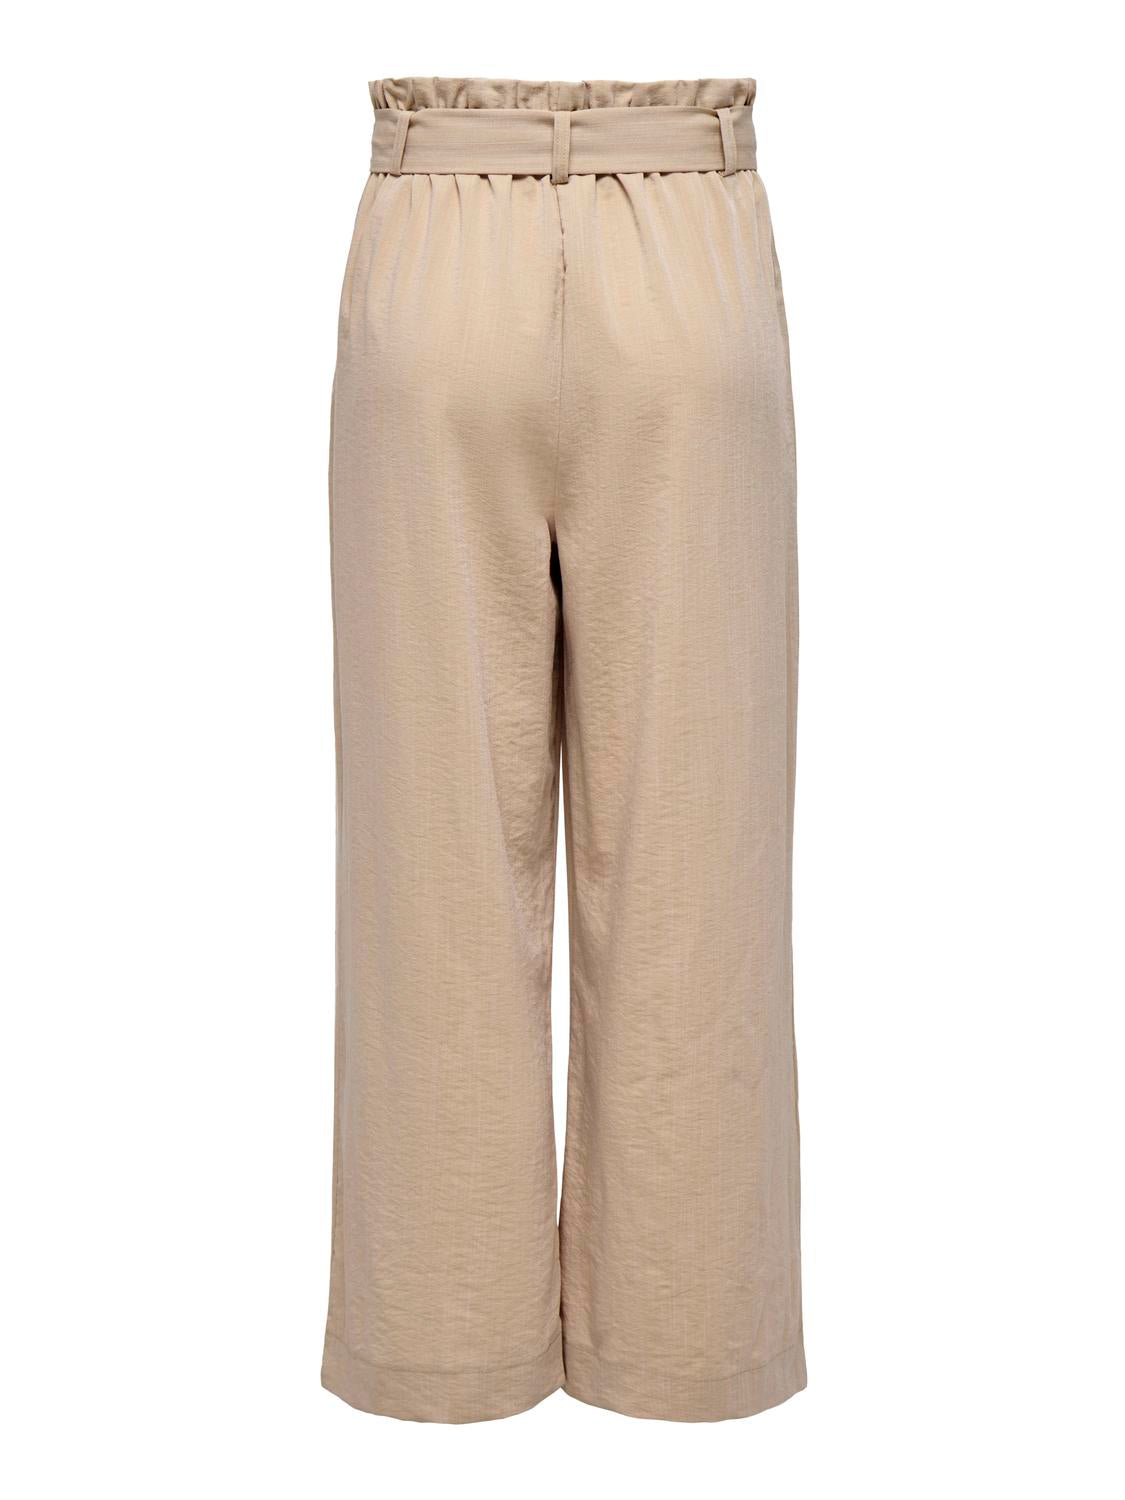 Marsa Paperbag Trousers - Safari Melange